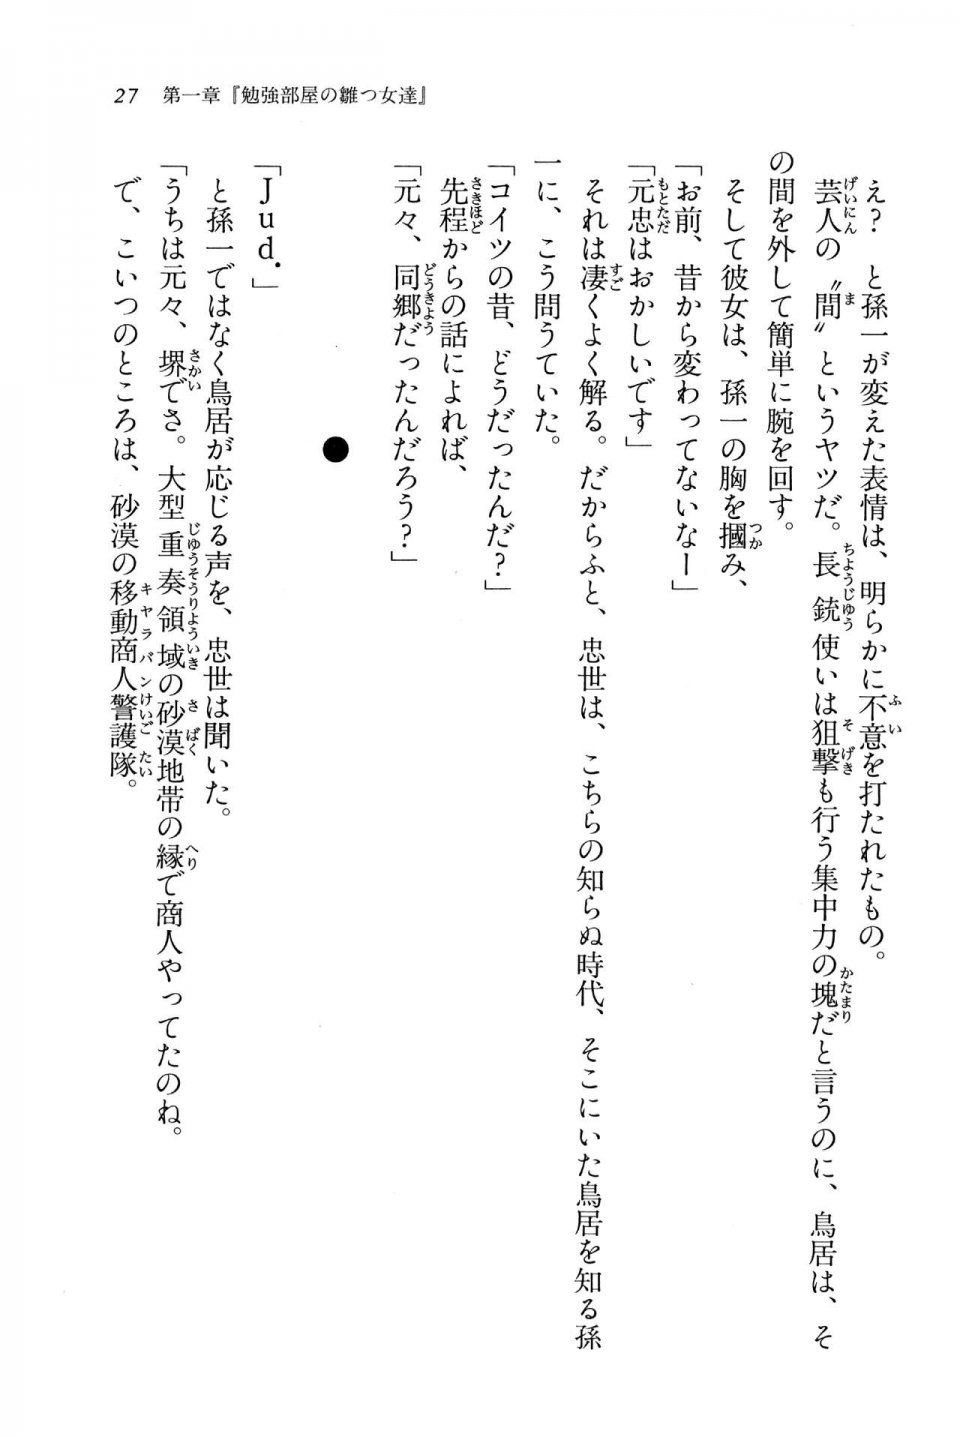 Kyoukai Senjou no Horizon BD Special Mininovel Vol 7(4A) - Photo #31